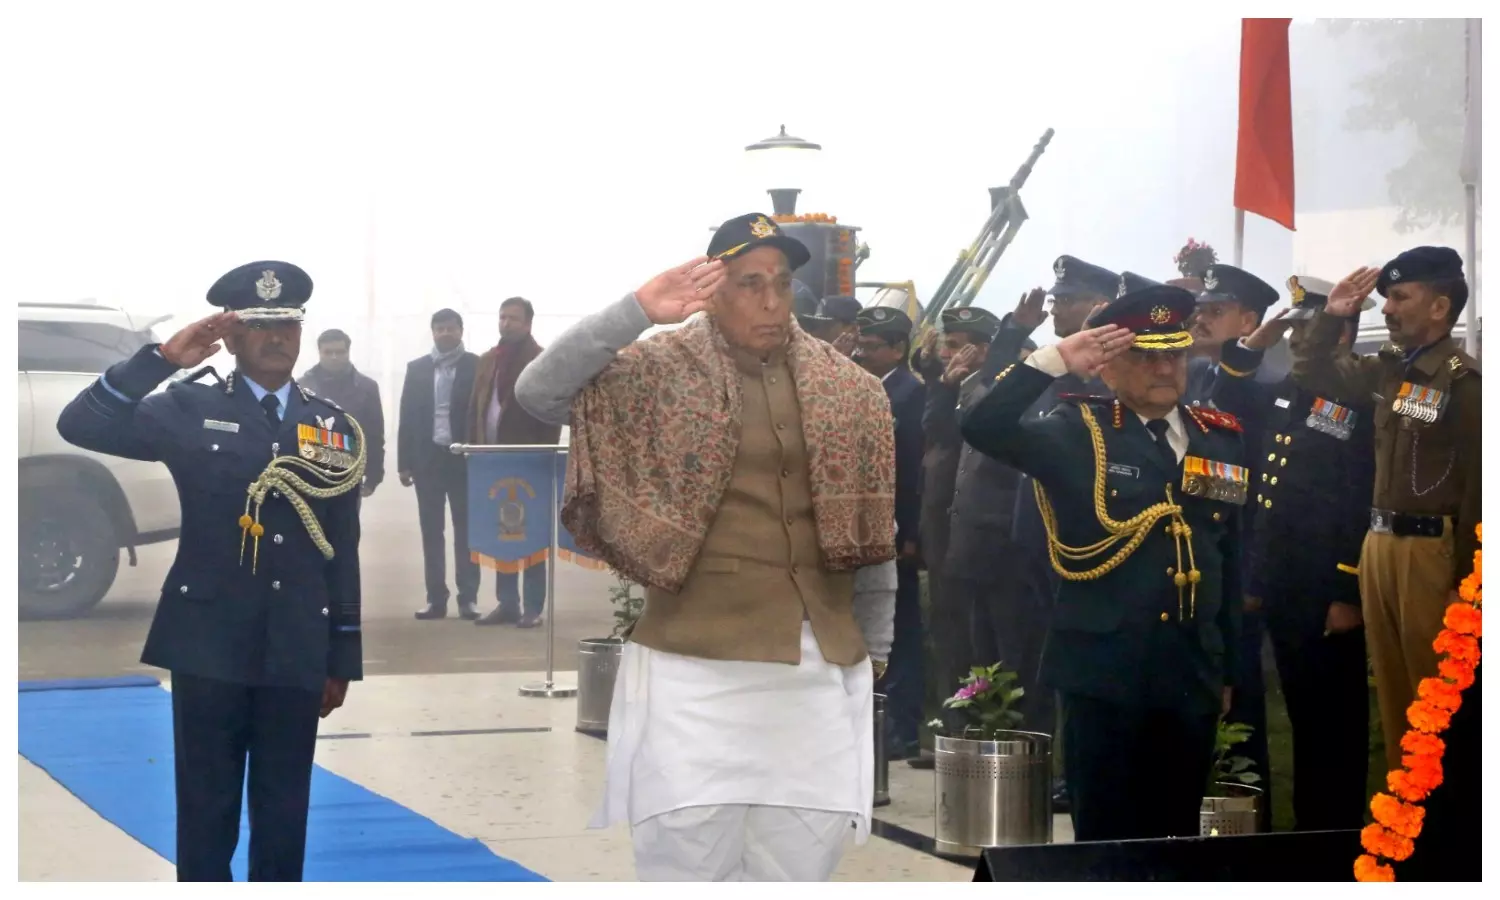 Defense Minister Rajnath Singh